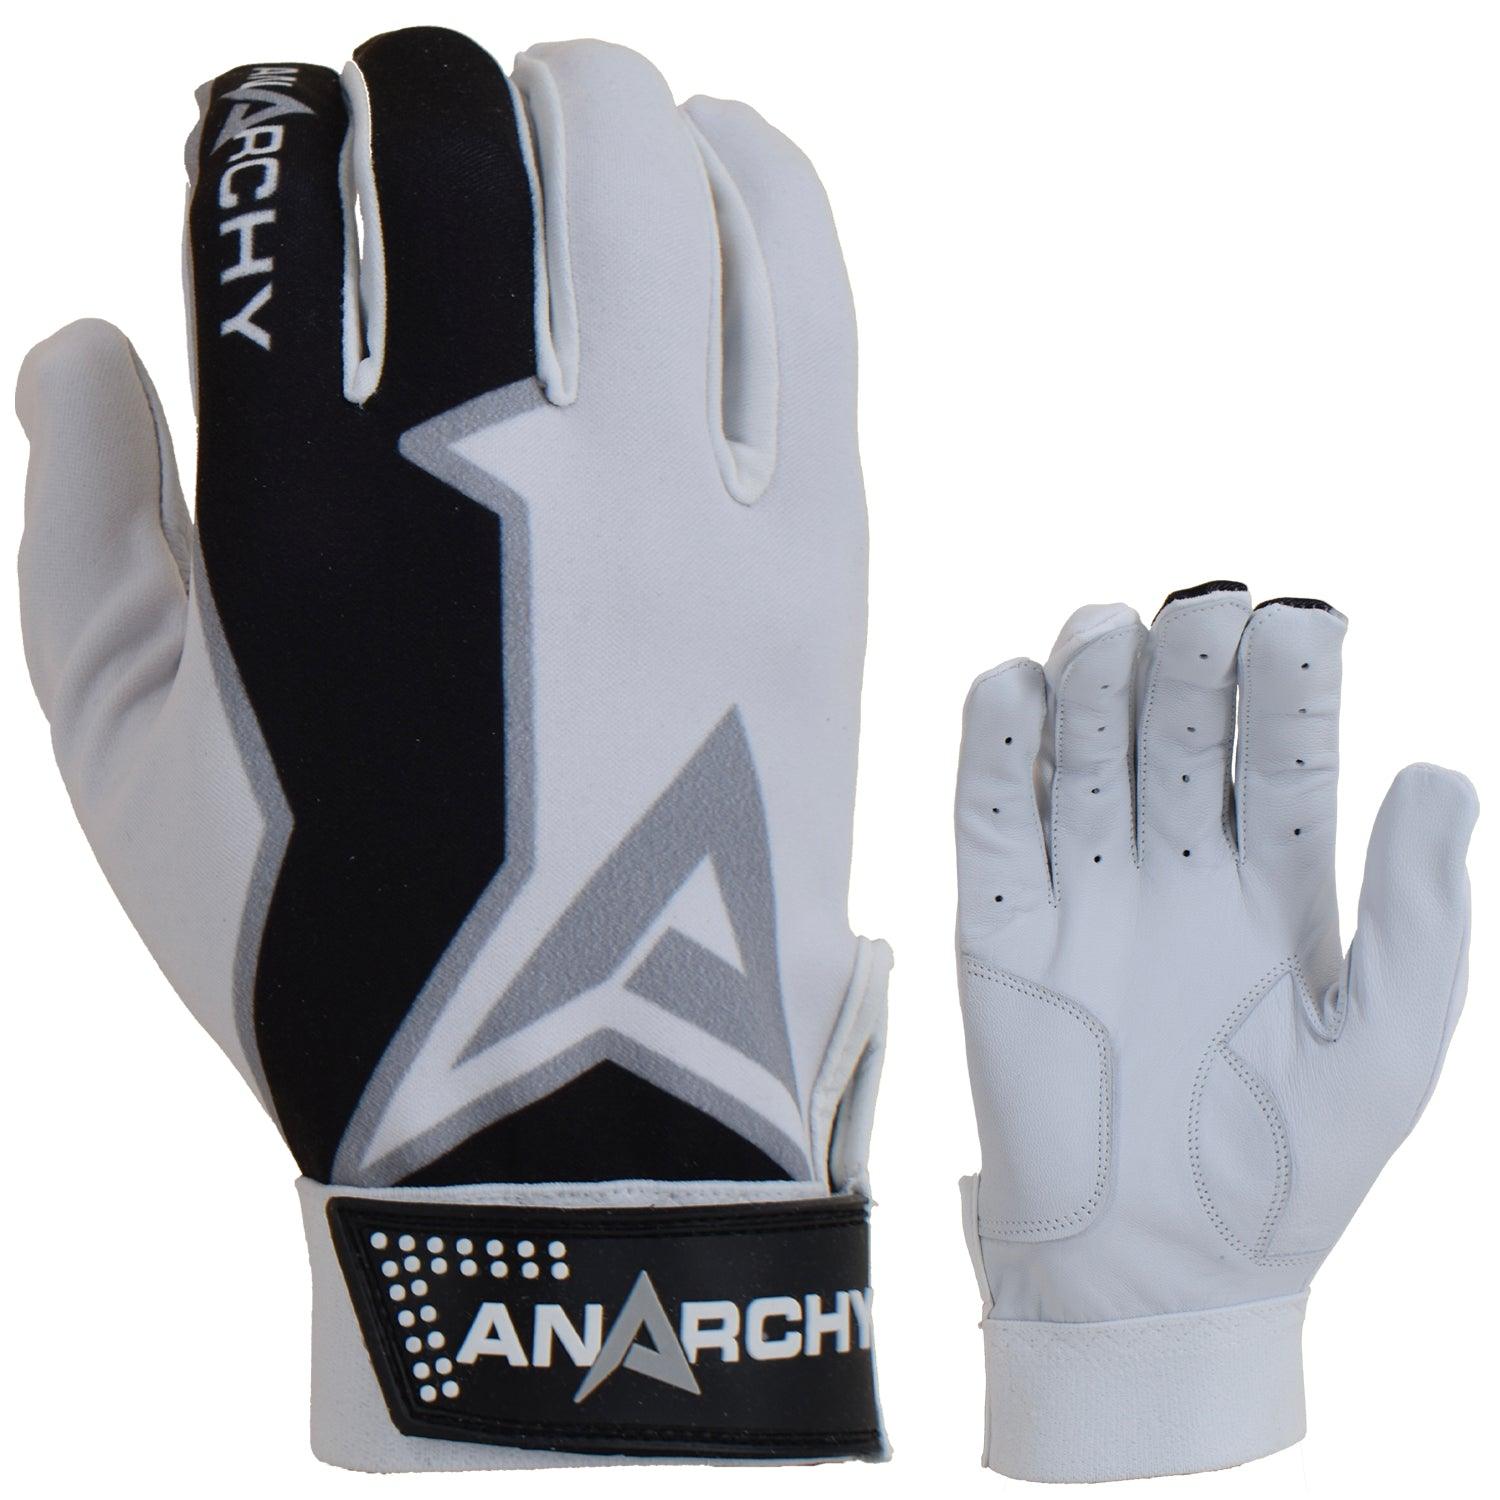 Anarchy Premium Batting Gloves- White/Black - Smash It Sports